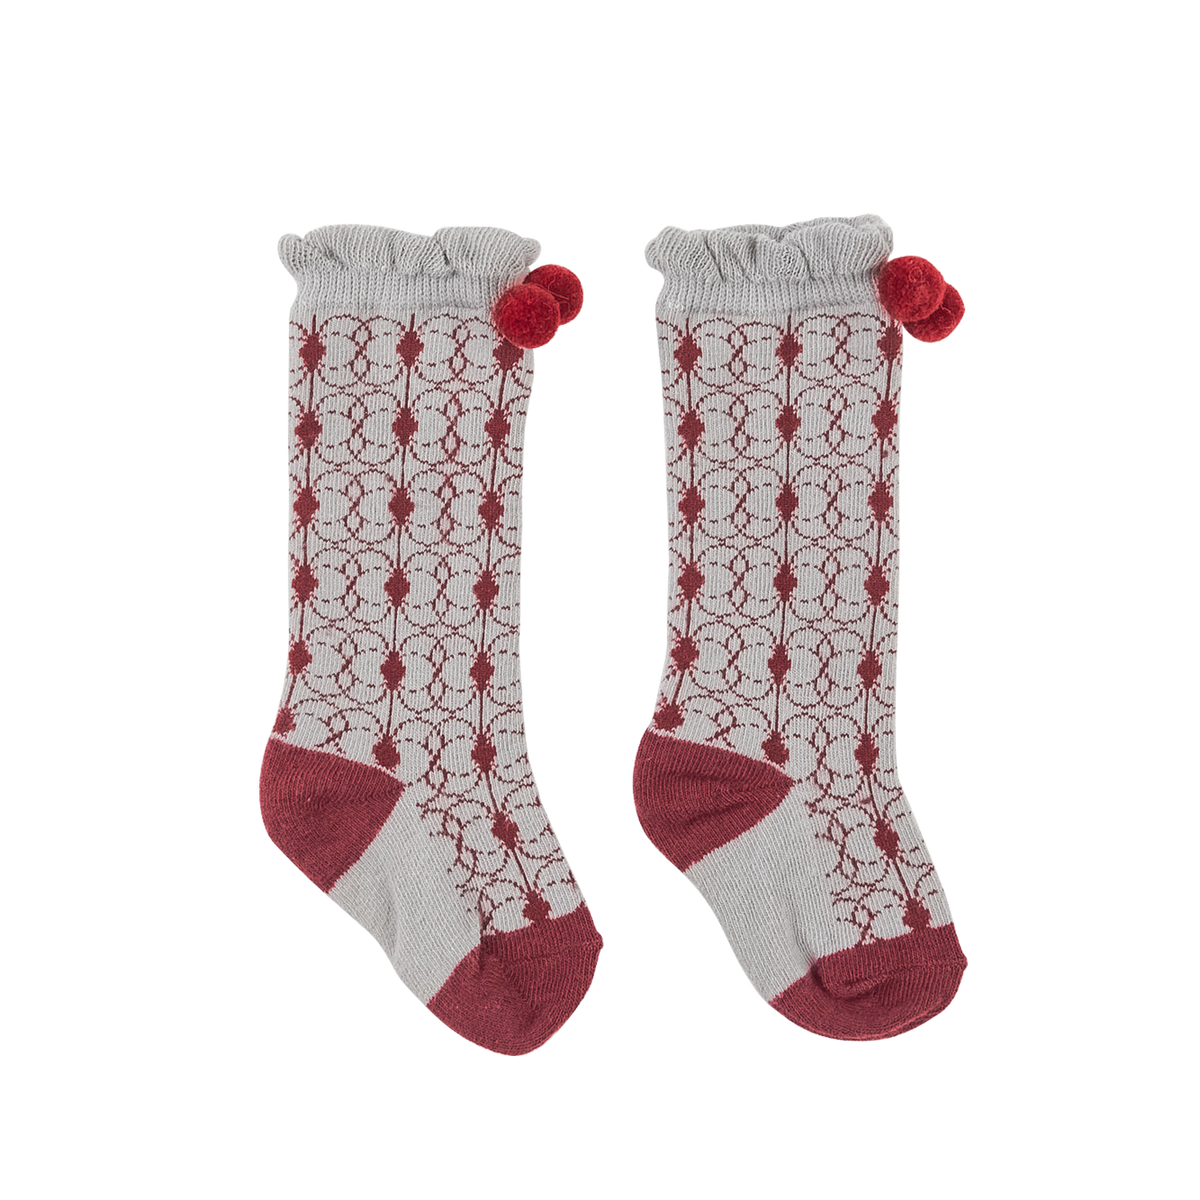 Light grey long baby socks with pom poms